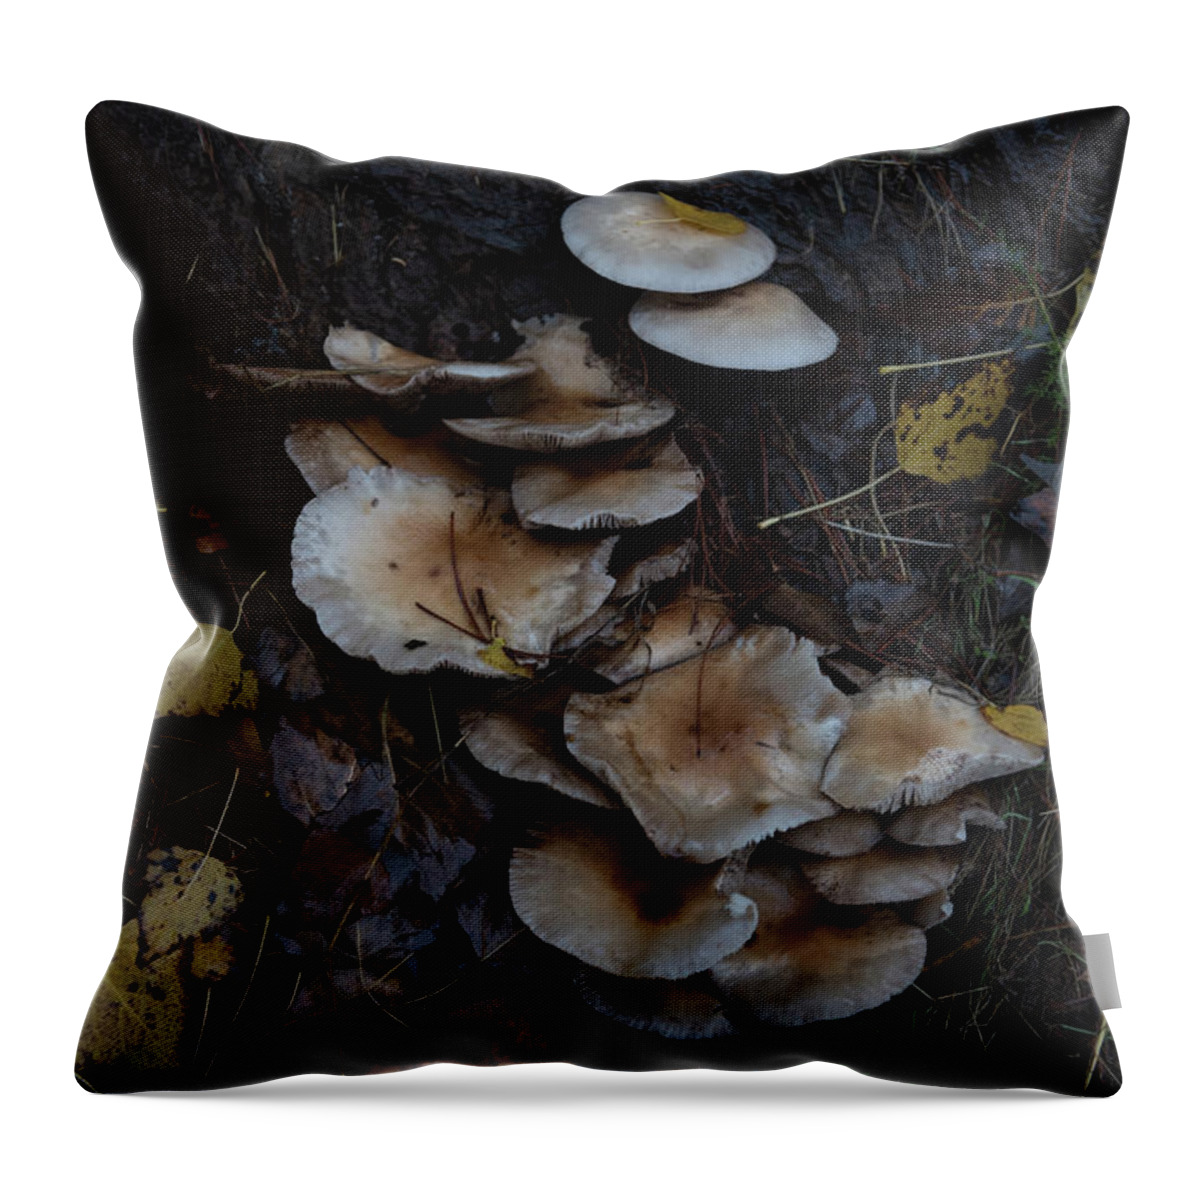 Europe Throw Pillow featuring the photograph Mushrooms #1 by Eleni Kouri